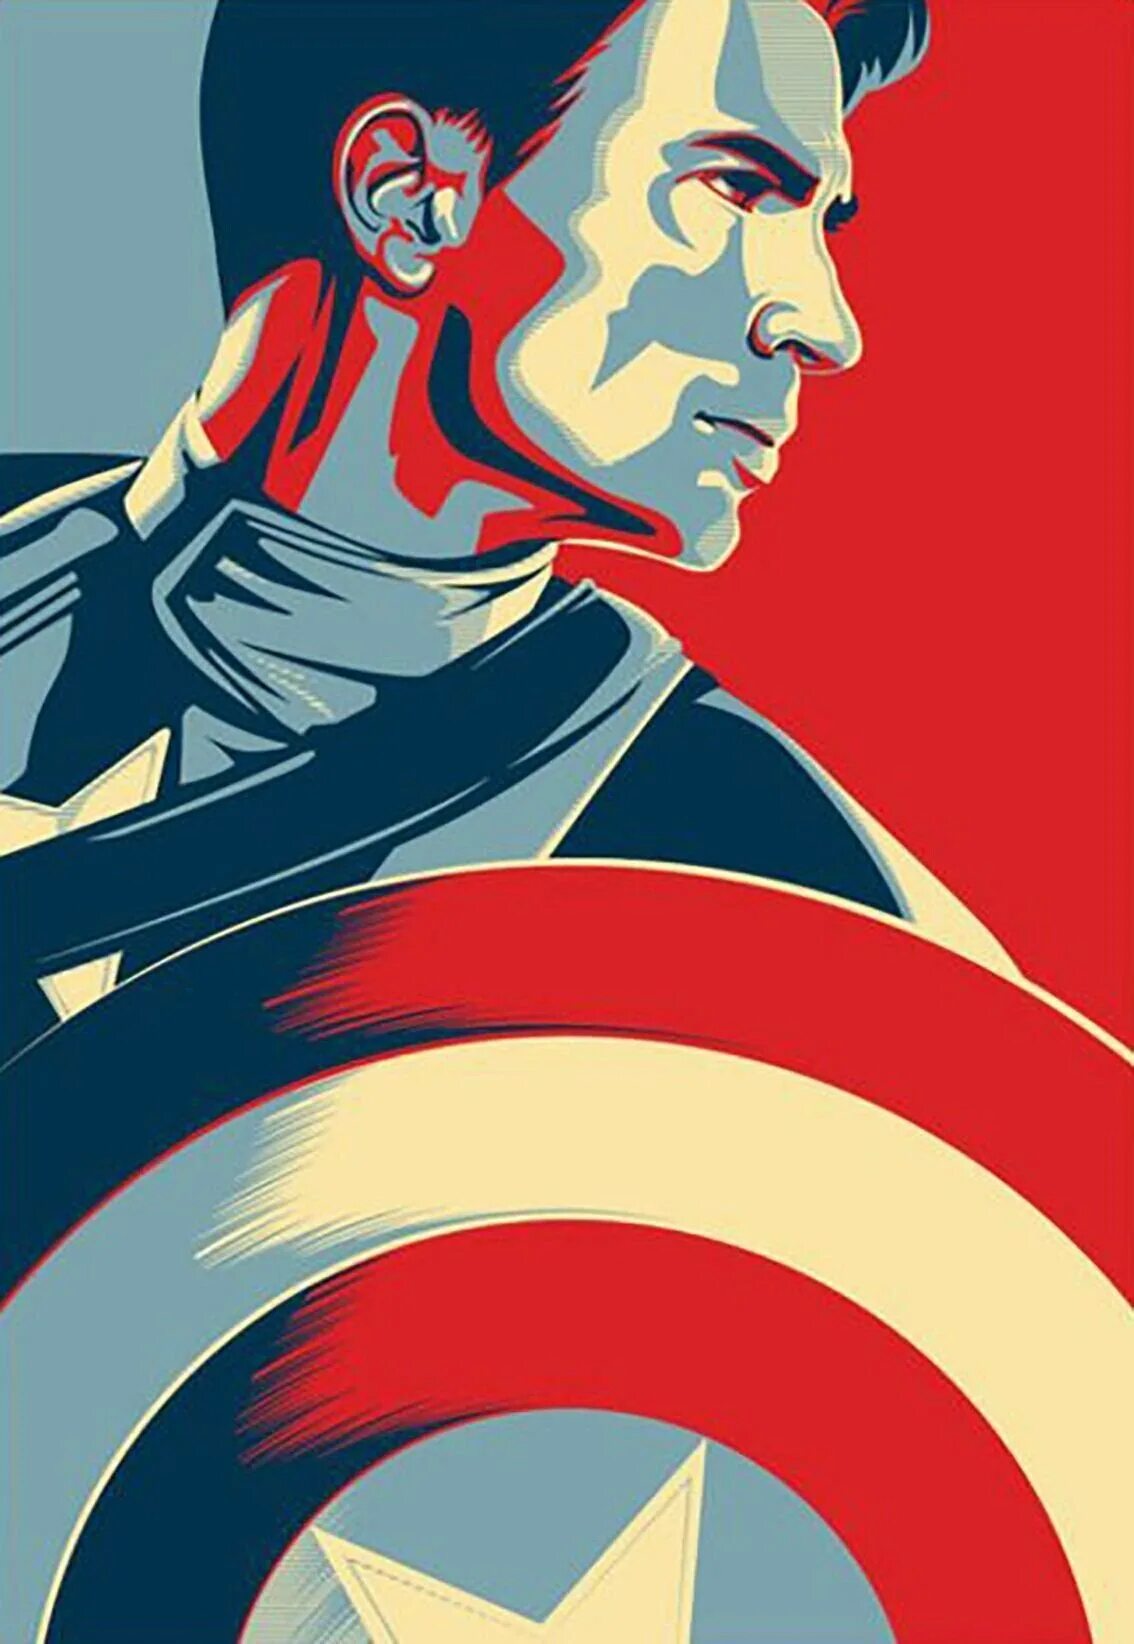 Хомели арт. Капитан Америка арт. Постеры в стиле комиксов. Мстители поп арт. Плакаты в стиле Марвел.